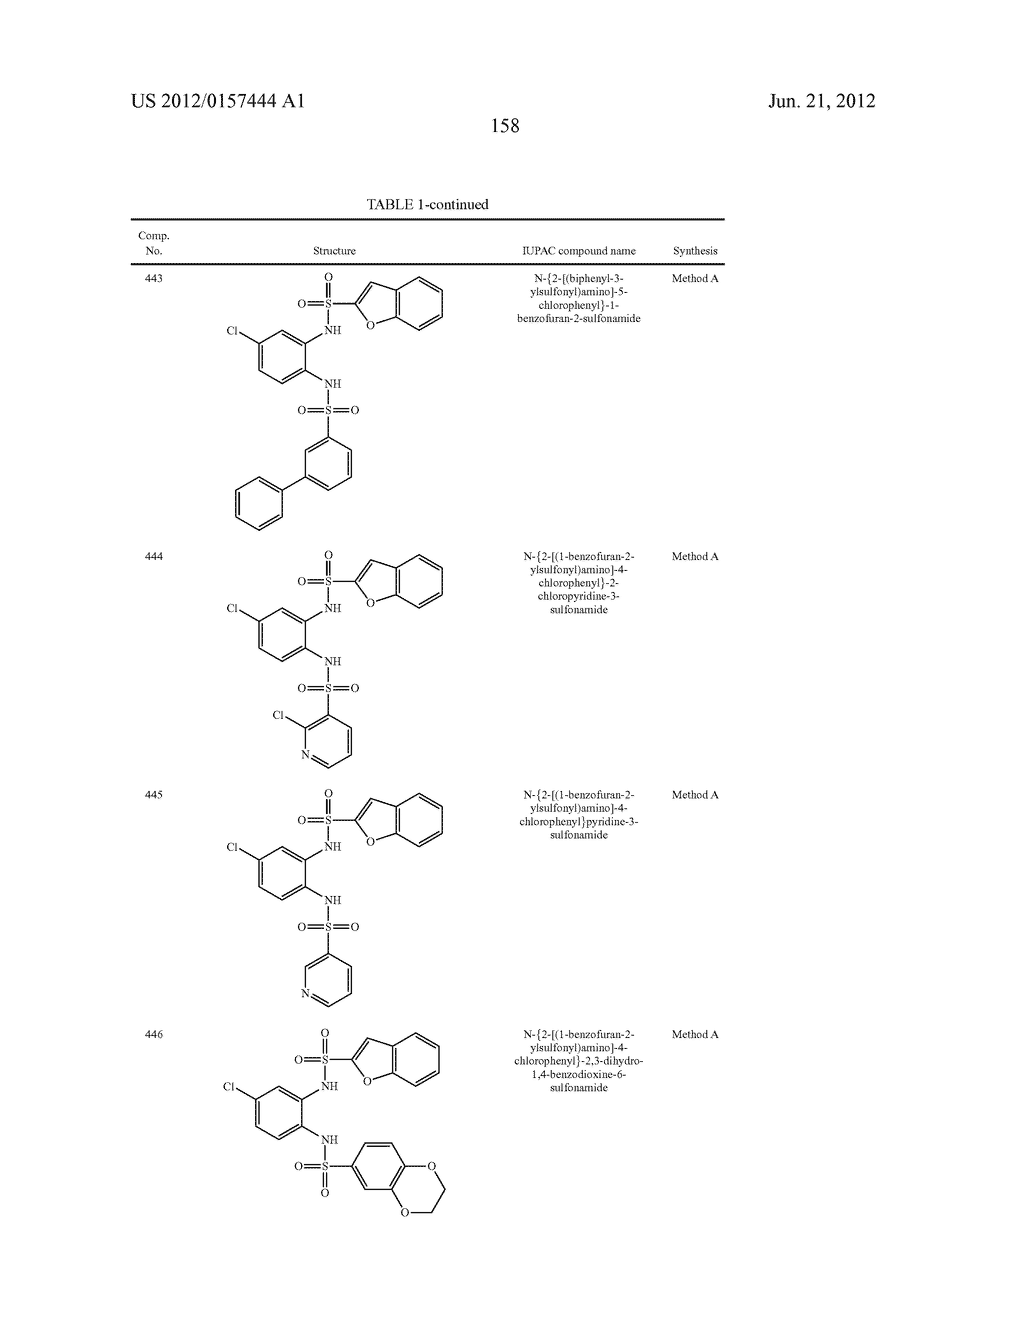 NOVEL 1,2- BIS-SULFONAMIDE DERIVATIVES AS CHEMOKINE RECEPTOR MODULATORS - diagram, schematic, and image 159